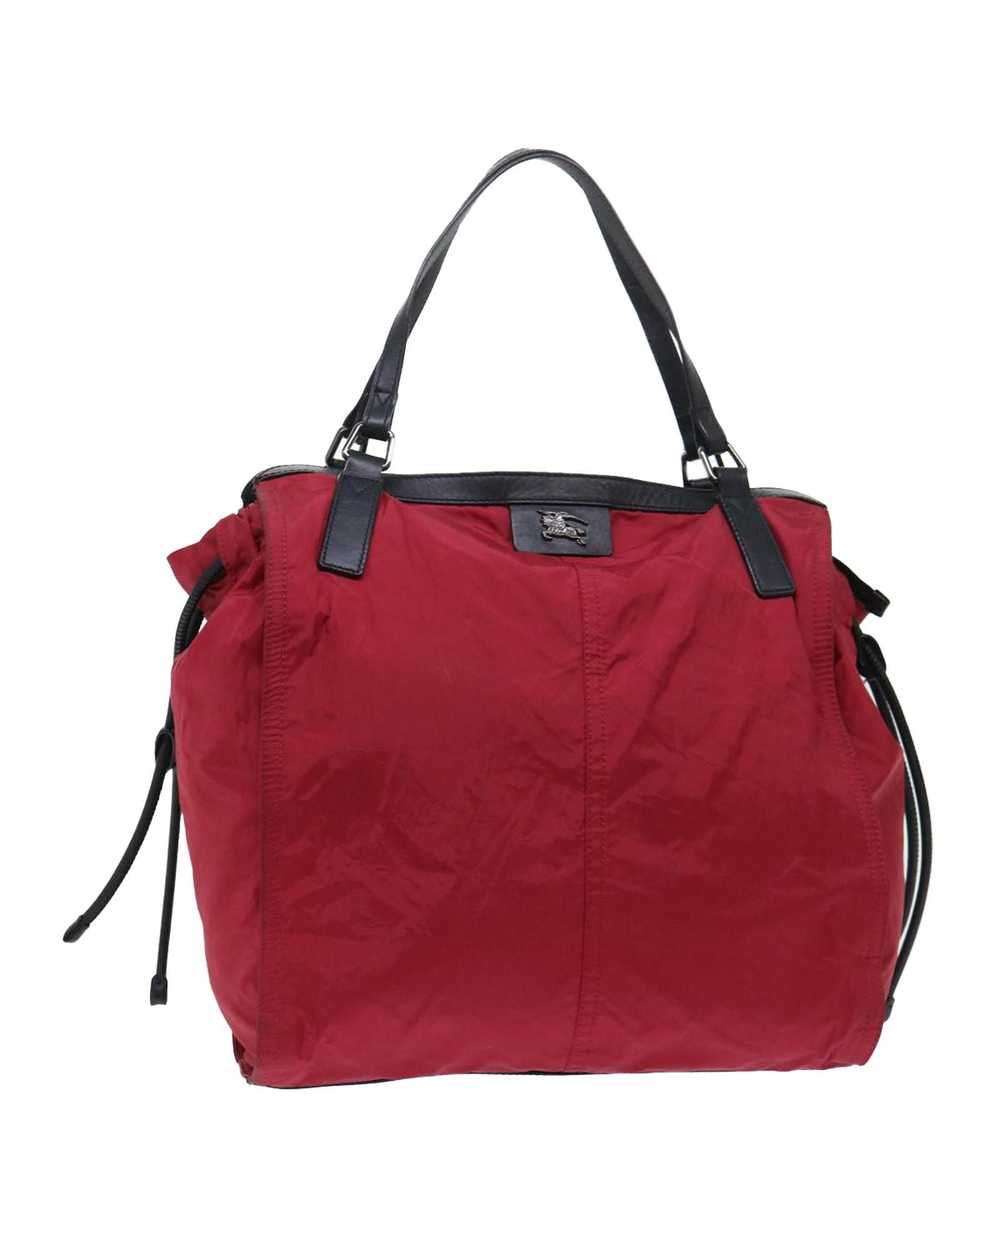 Burberry Red Nylon Leather Shoulder Bag - image 1